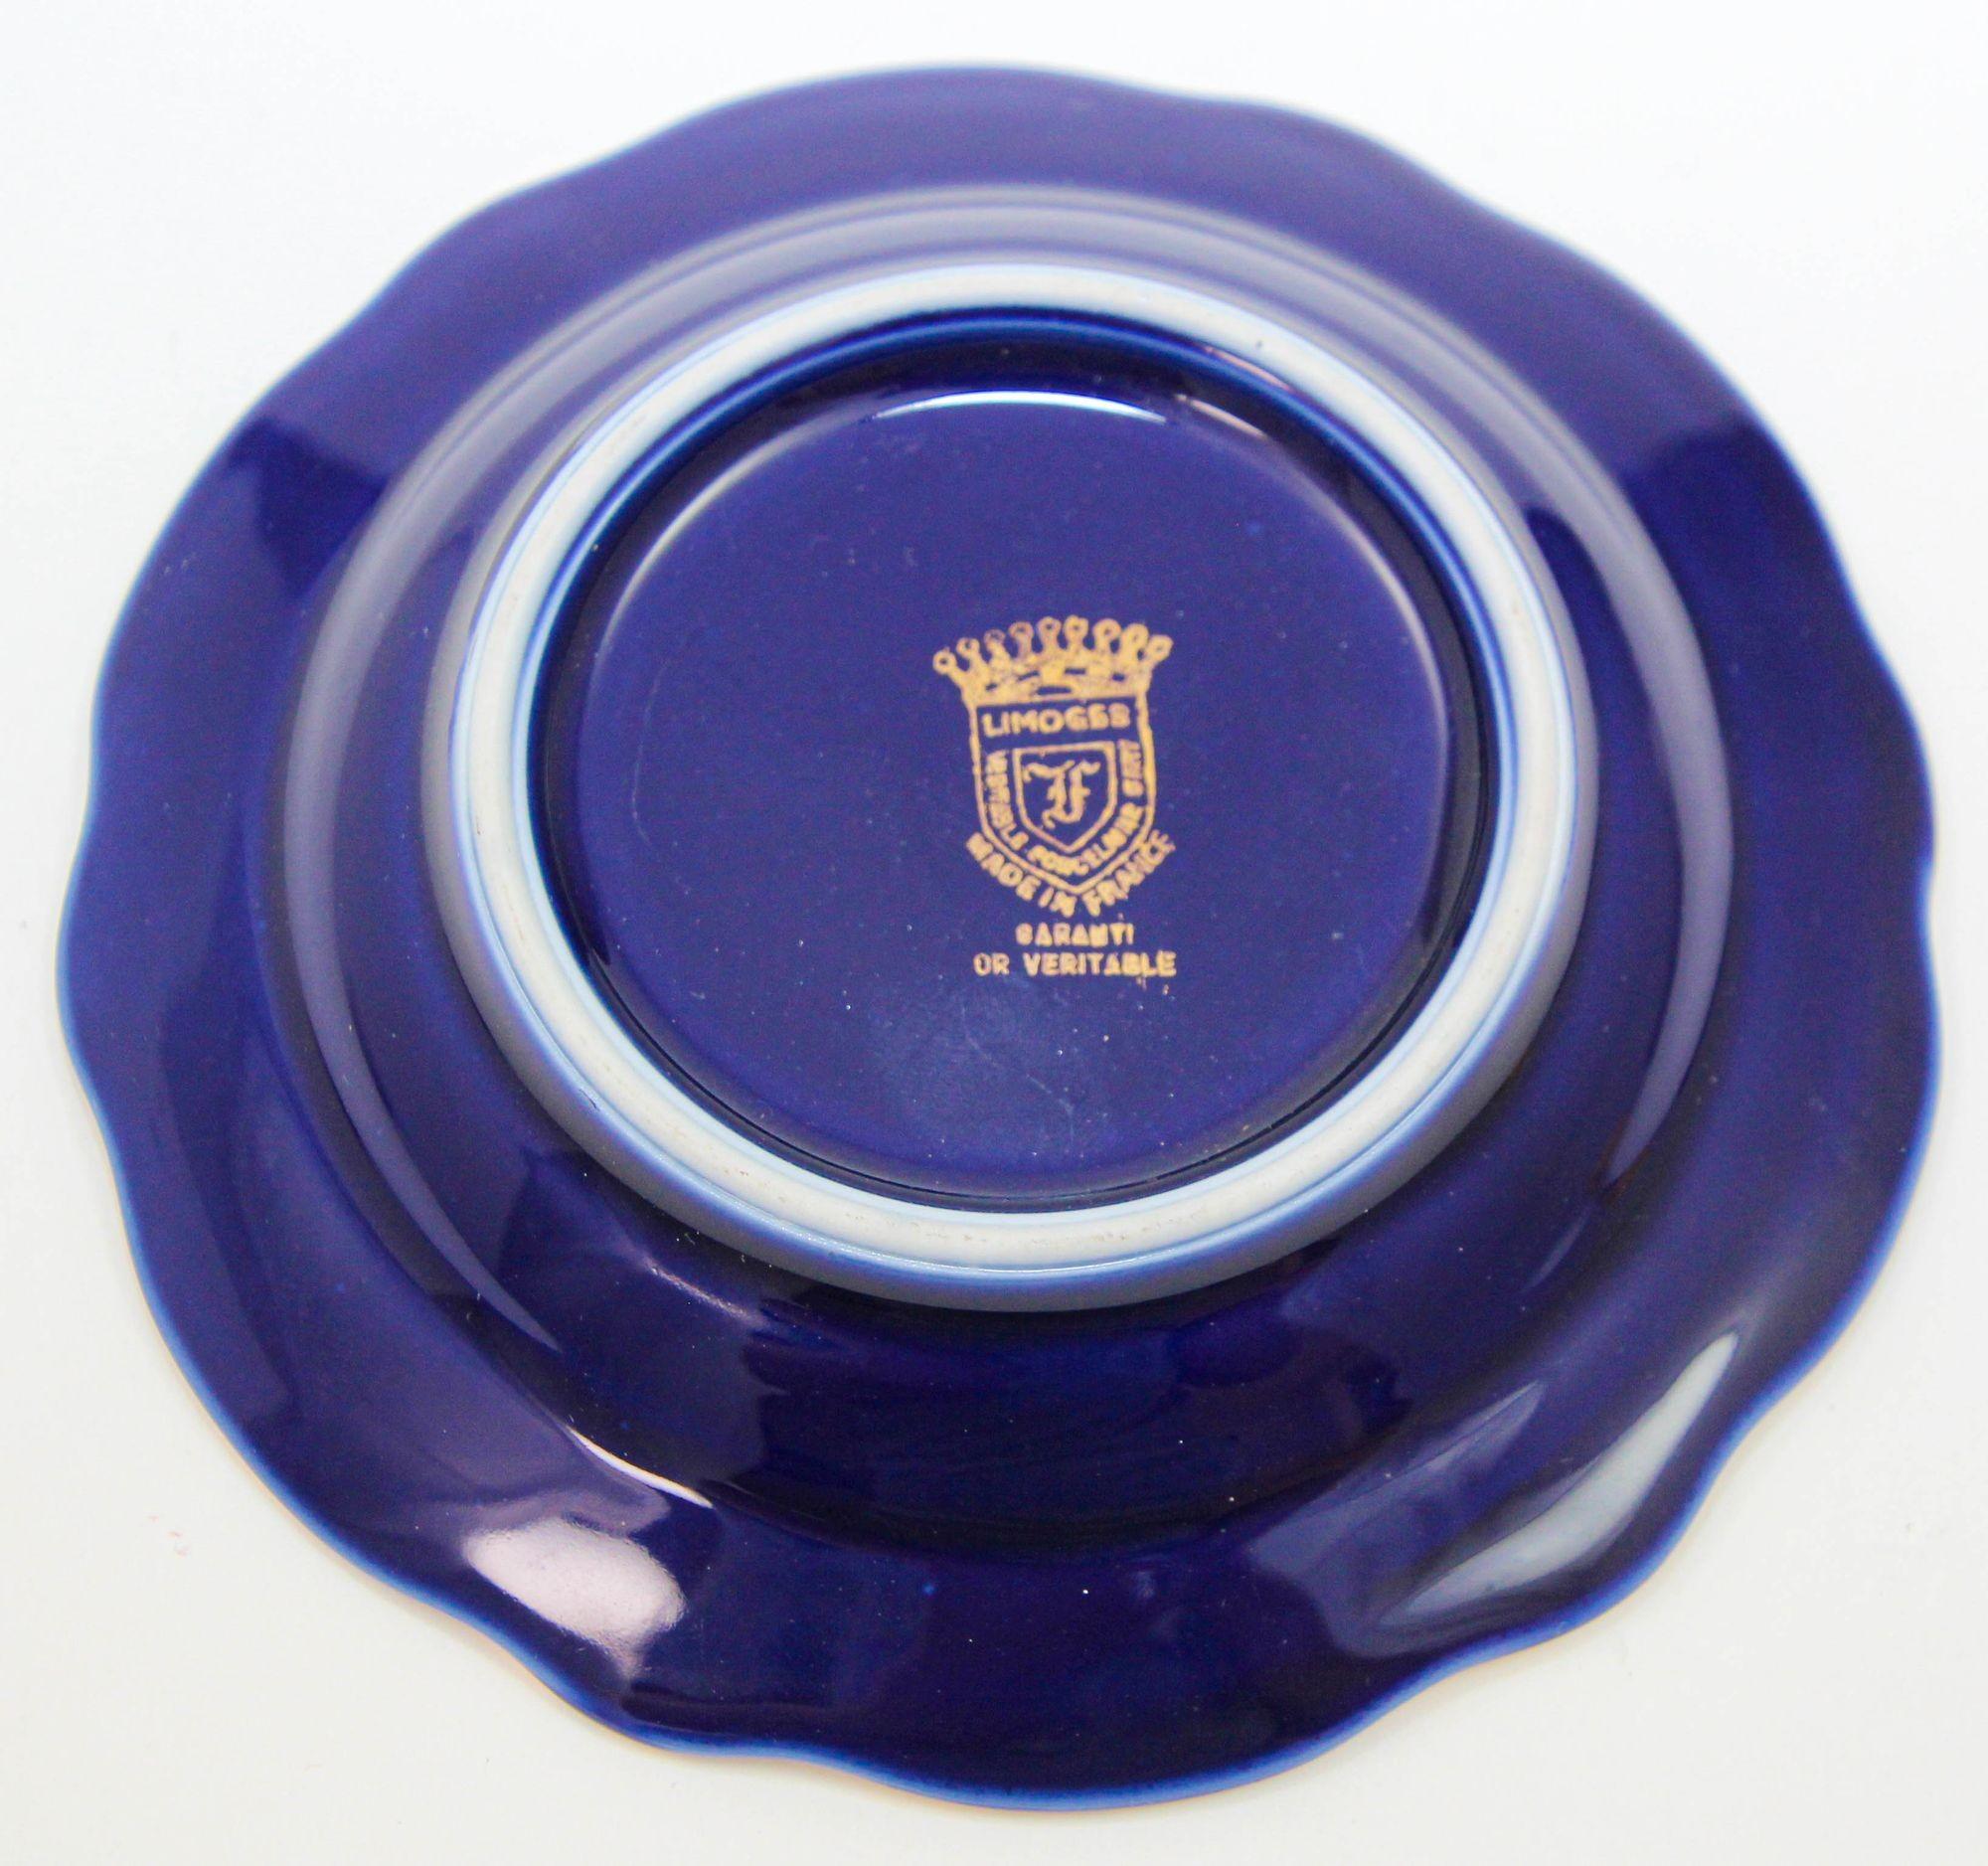 Hand-Crafted Limoges France Porcelain Dish Ashtray Souvenir of Paris Cobalt Blue and 24K Gold For Sale